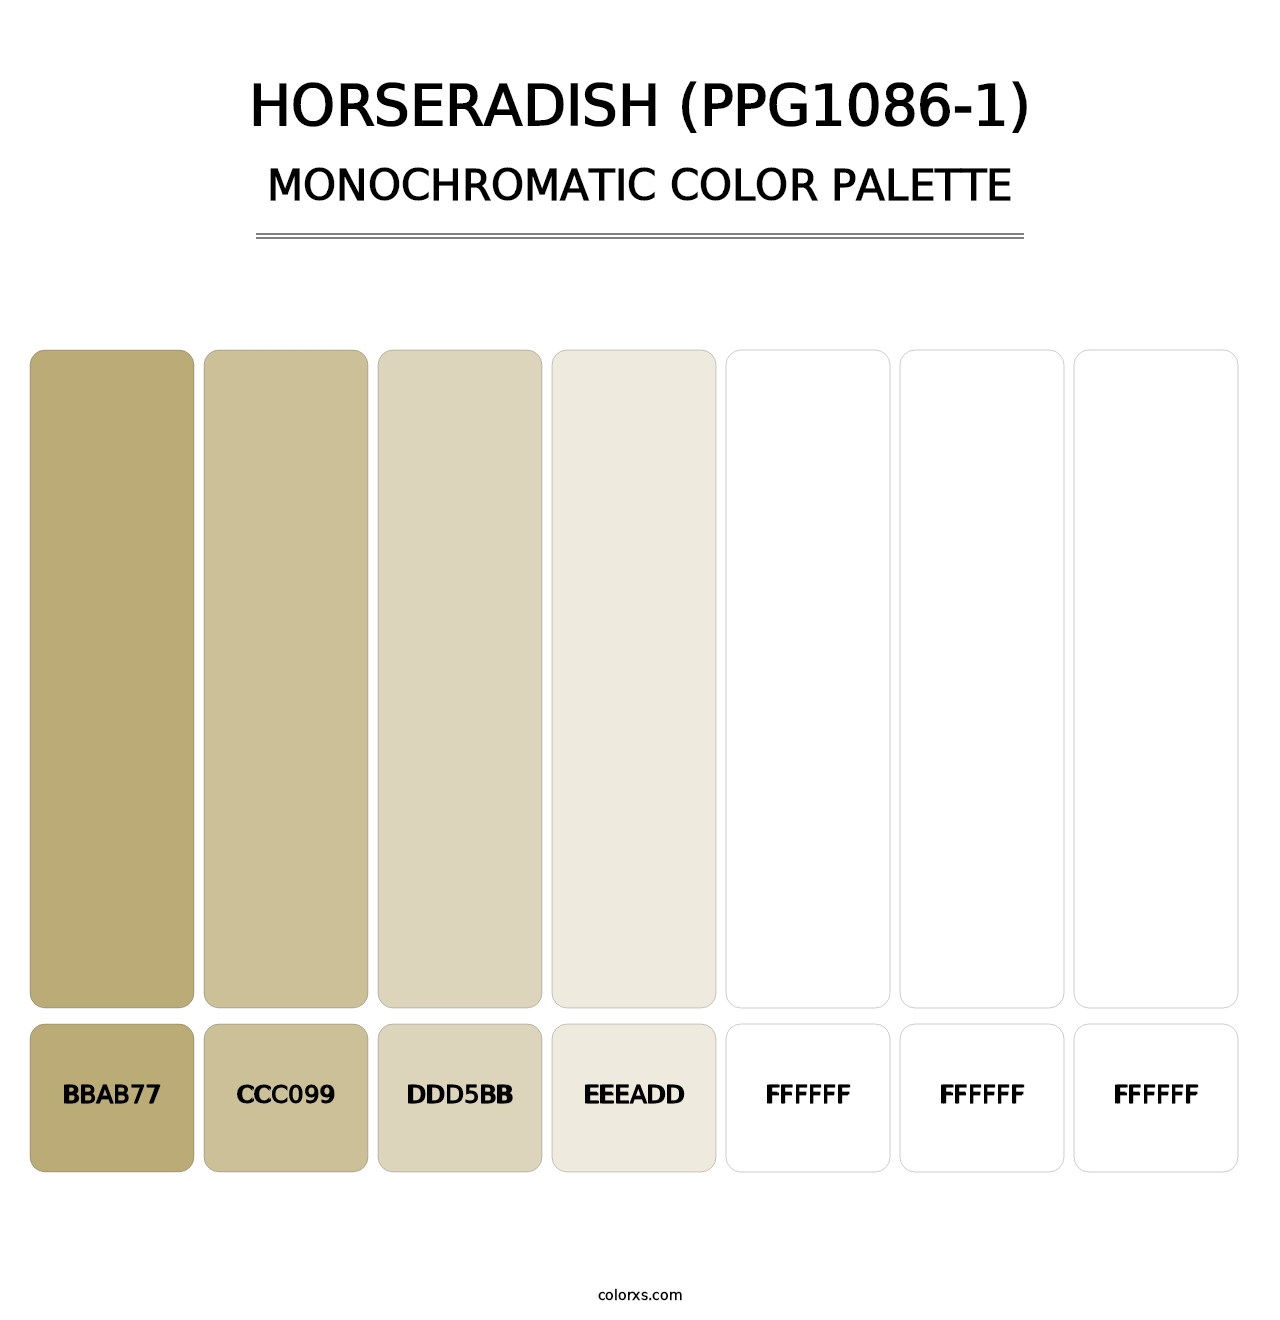 Horseradish (PPG1086-1) - Monochromatic Color Palette